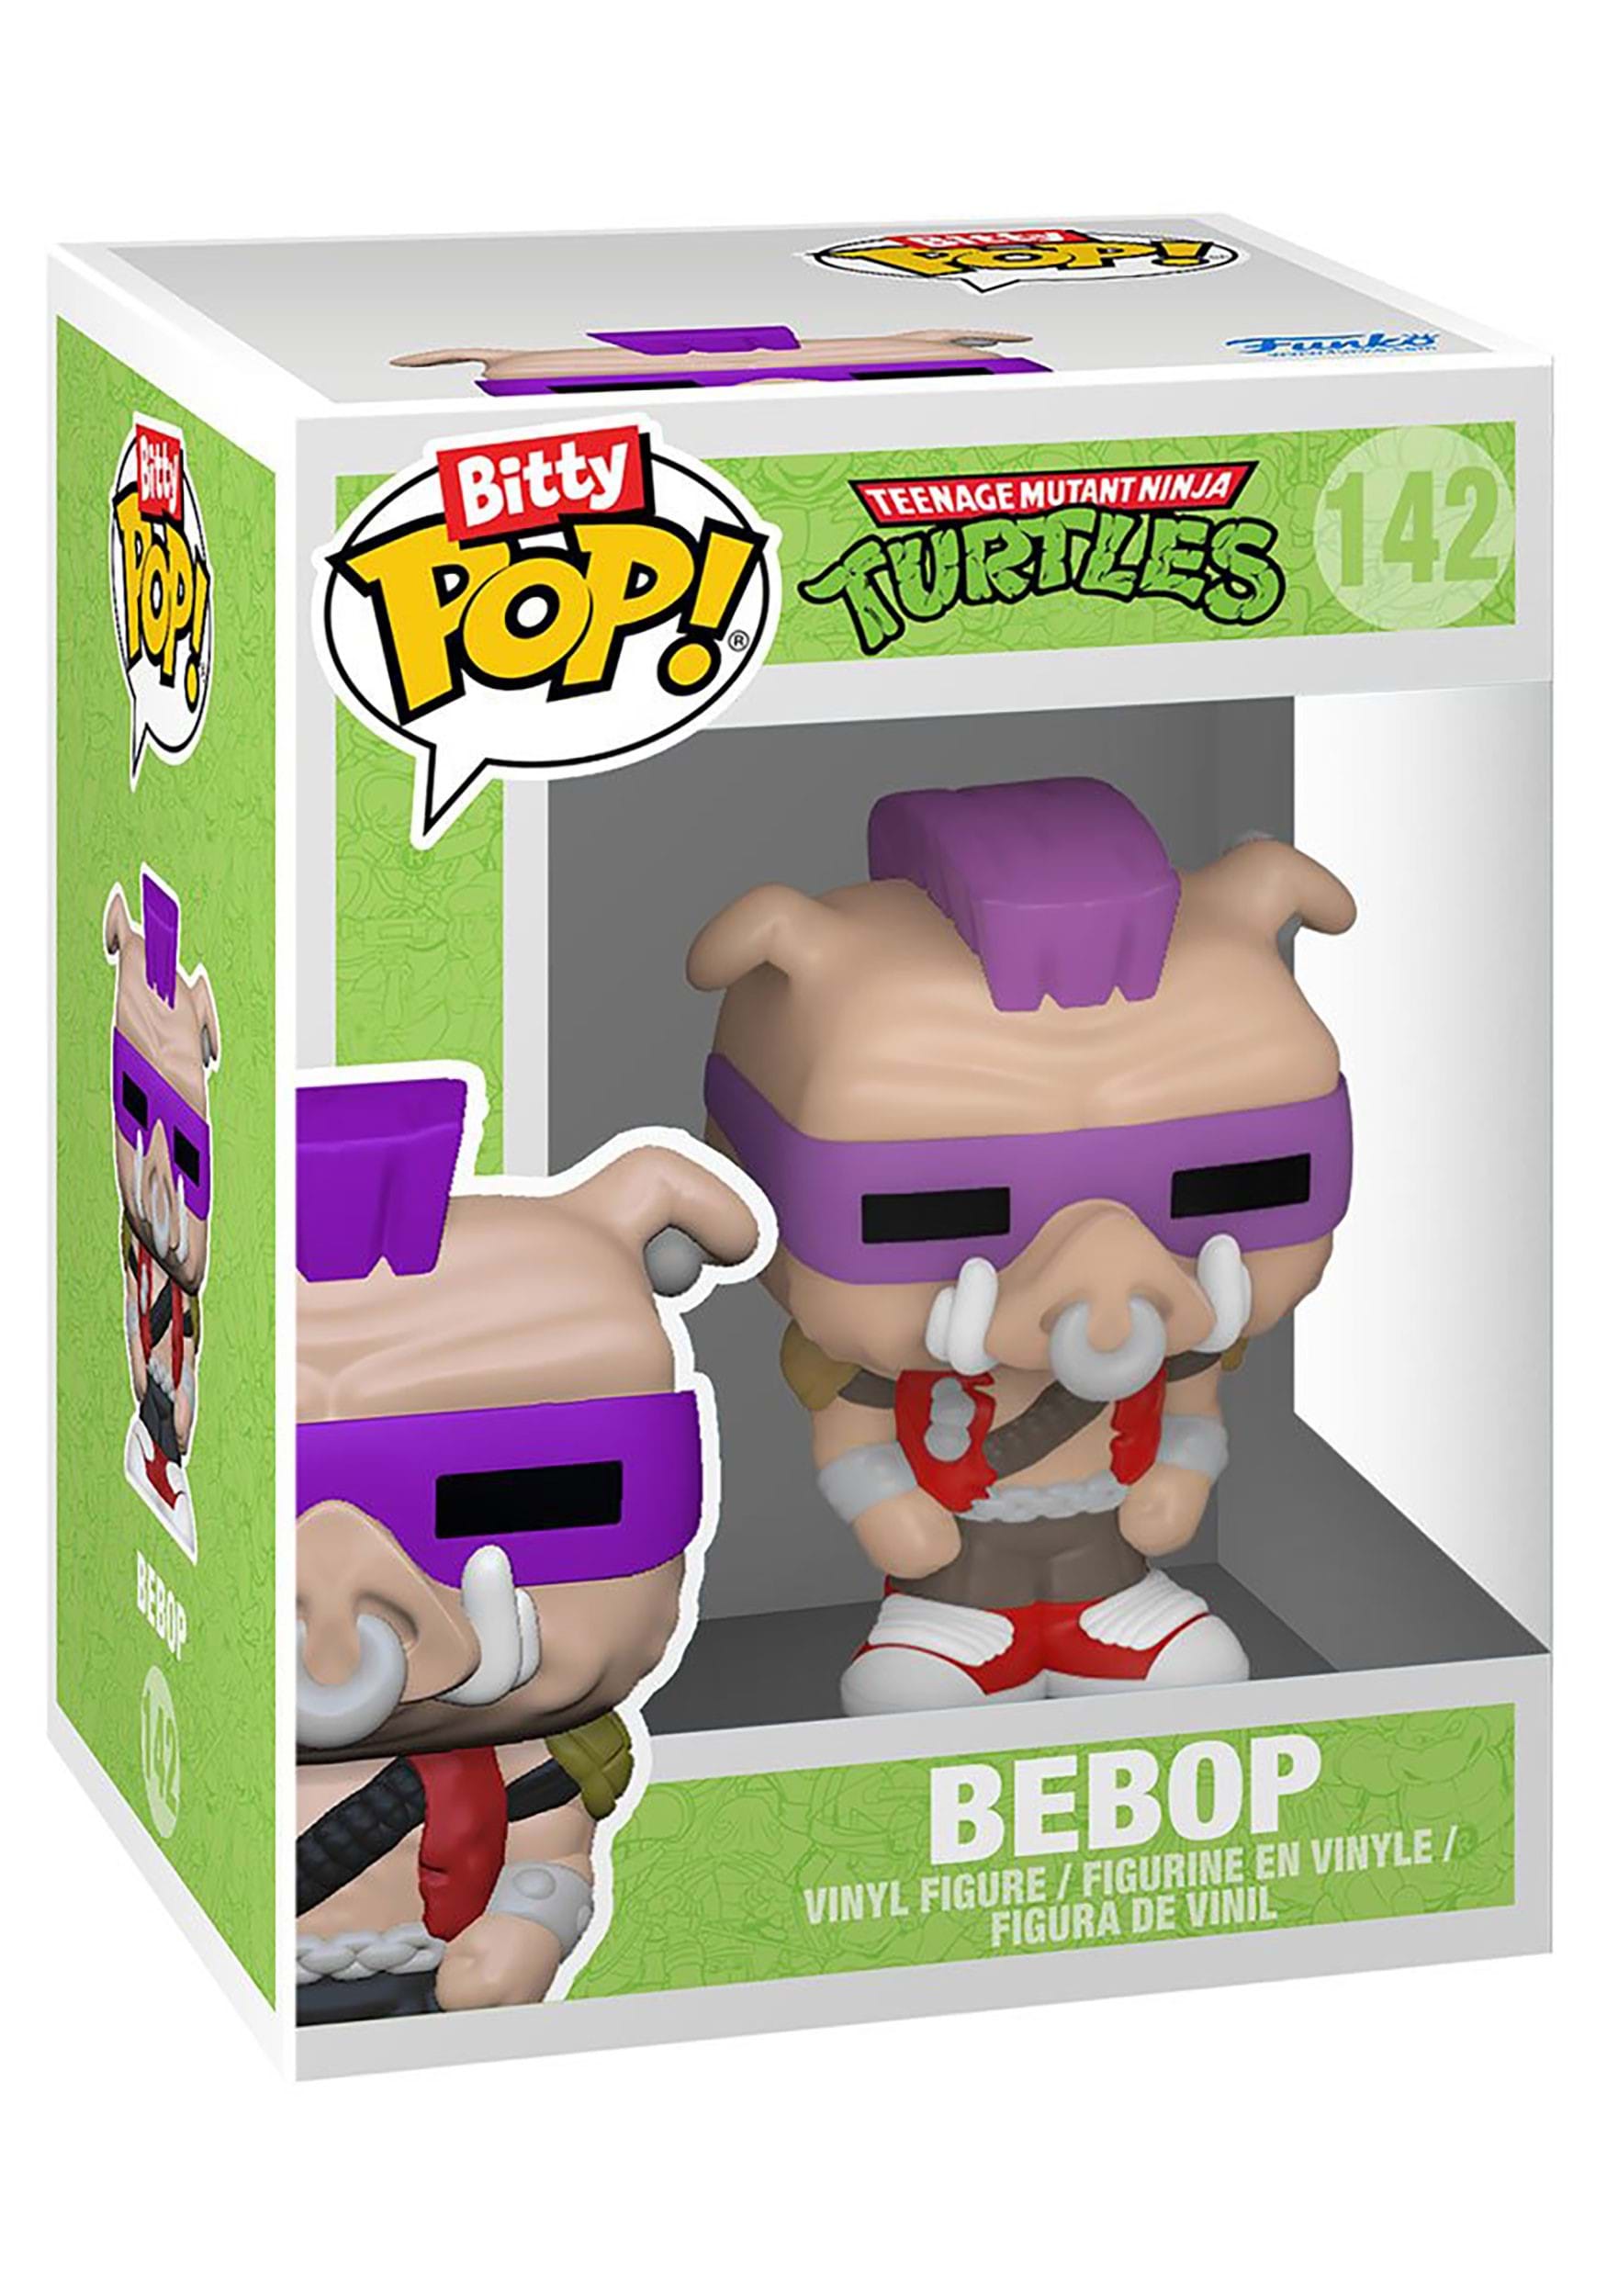 Bitty POP! Teenage Mutant Ninja Turtles 8-Bit 4 Pack Mini Figure